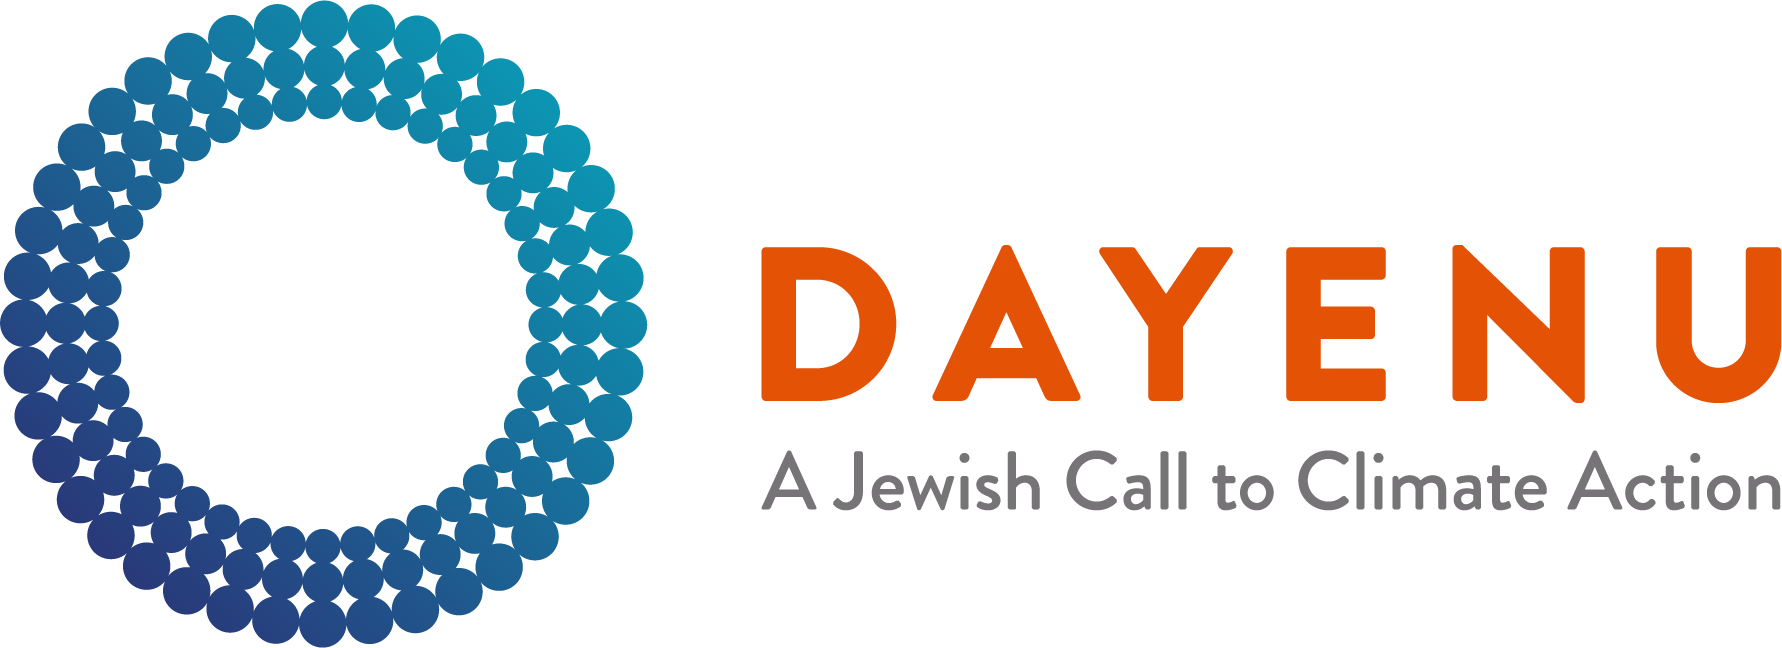 Dayenu: A Jewish Call to Climate Action